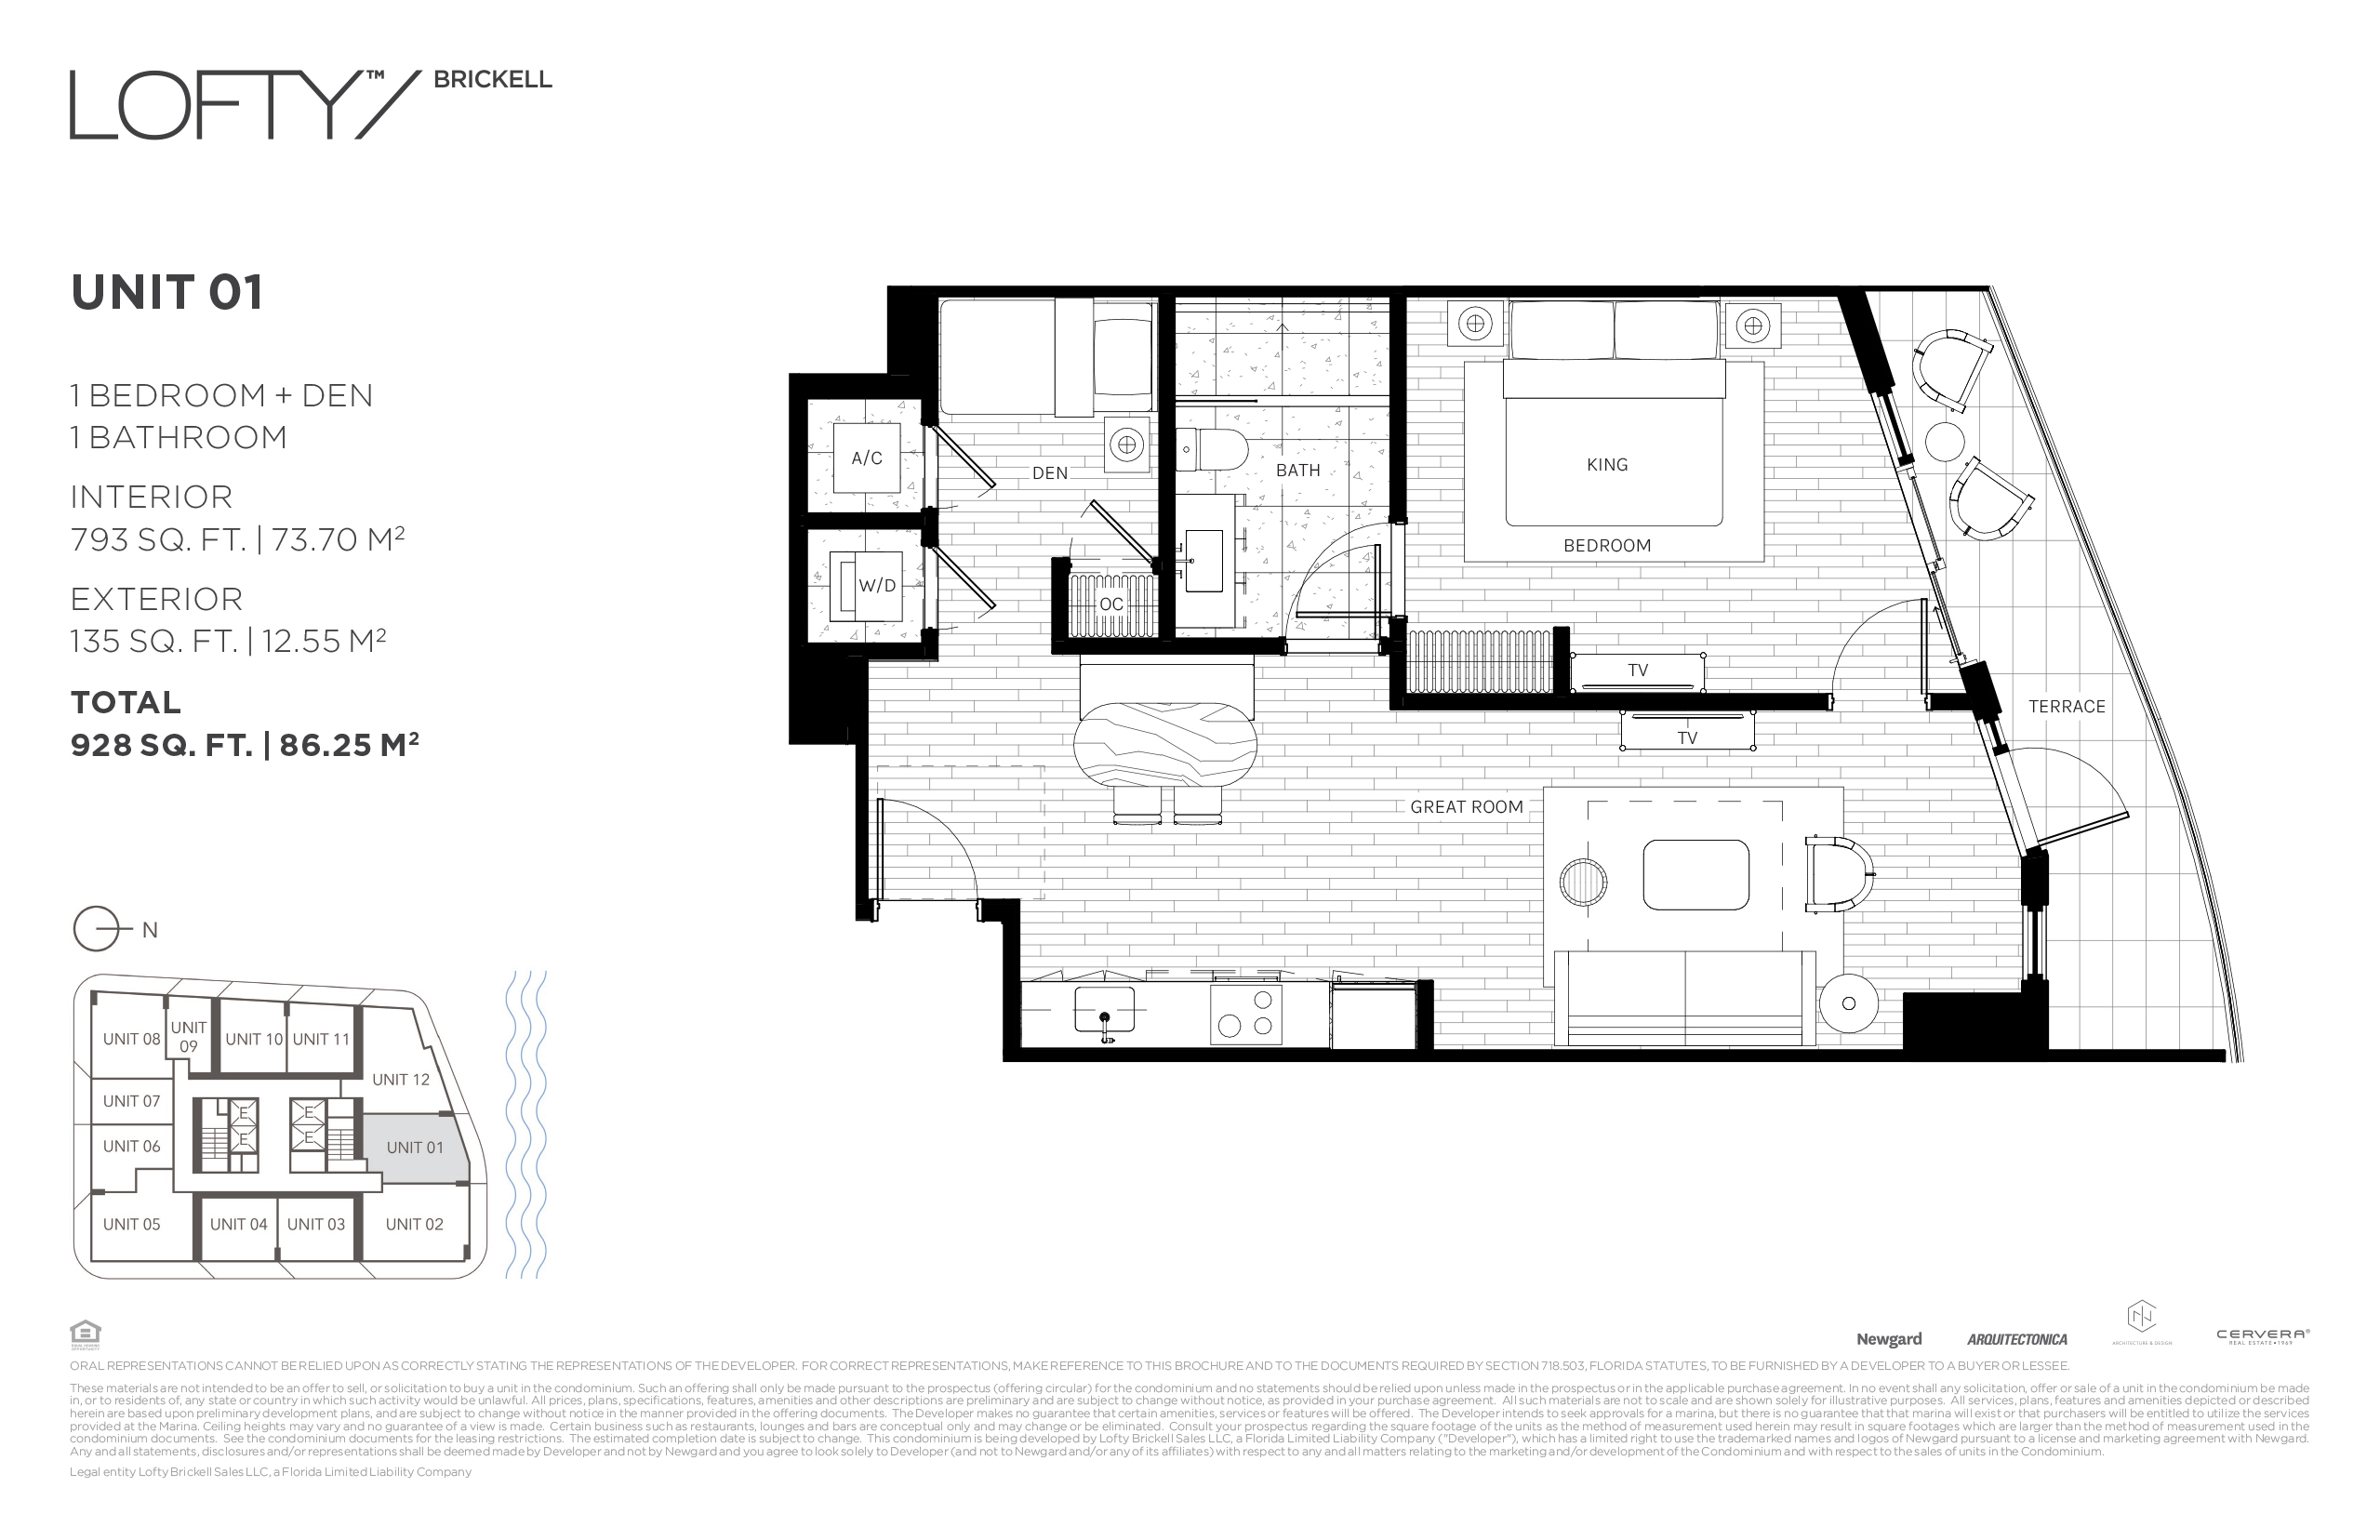 Floor Plan for Lofty Brickell Floorplans, Unit 01